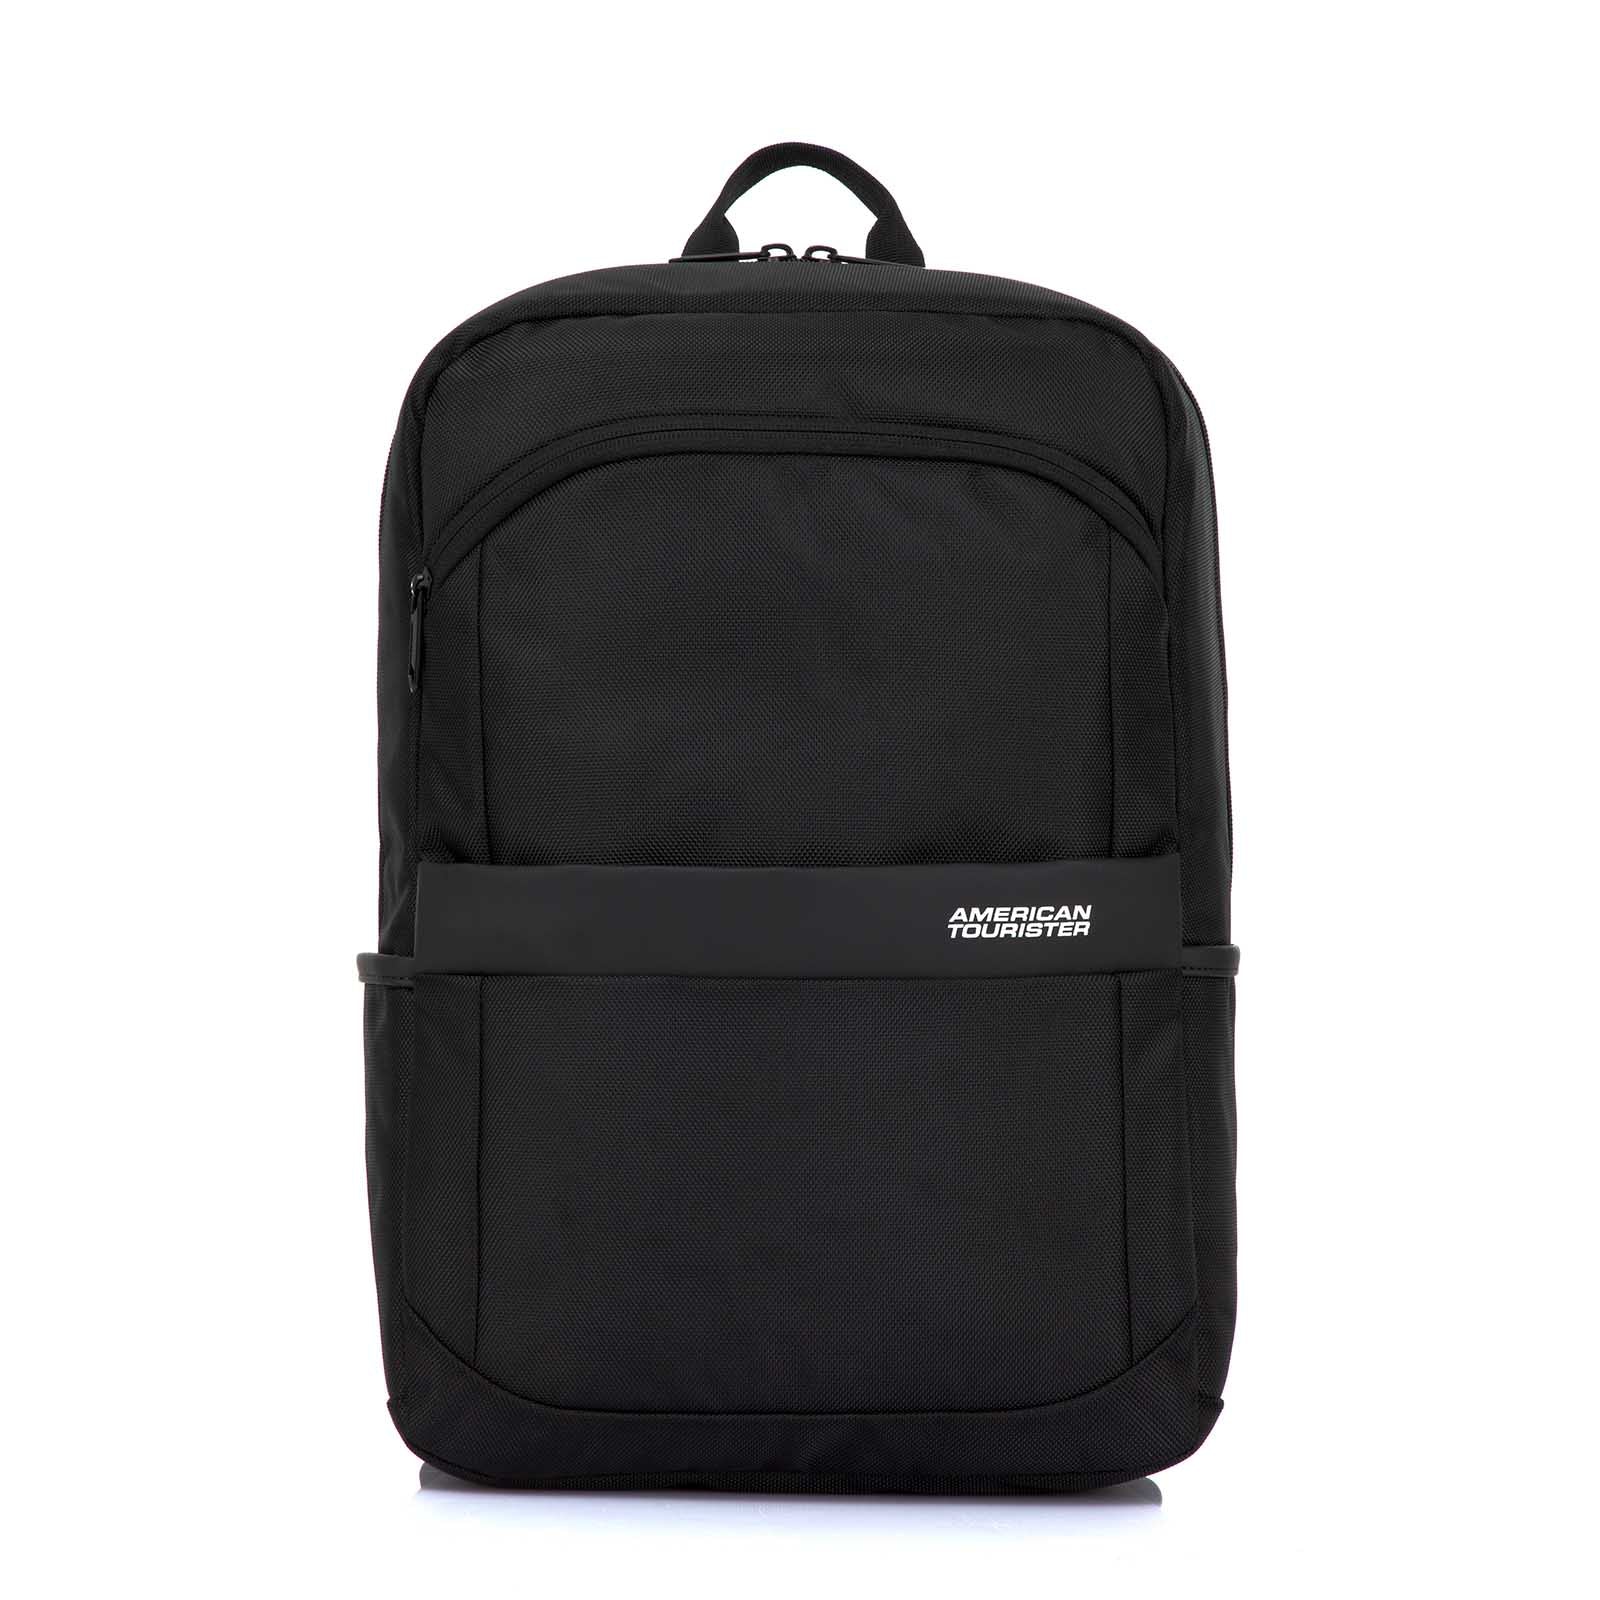 American-Tourister-Kamden-15-Inch-Laptop-Backpack-Black-Front